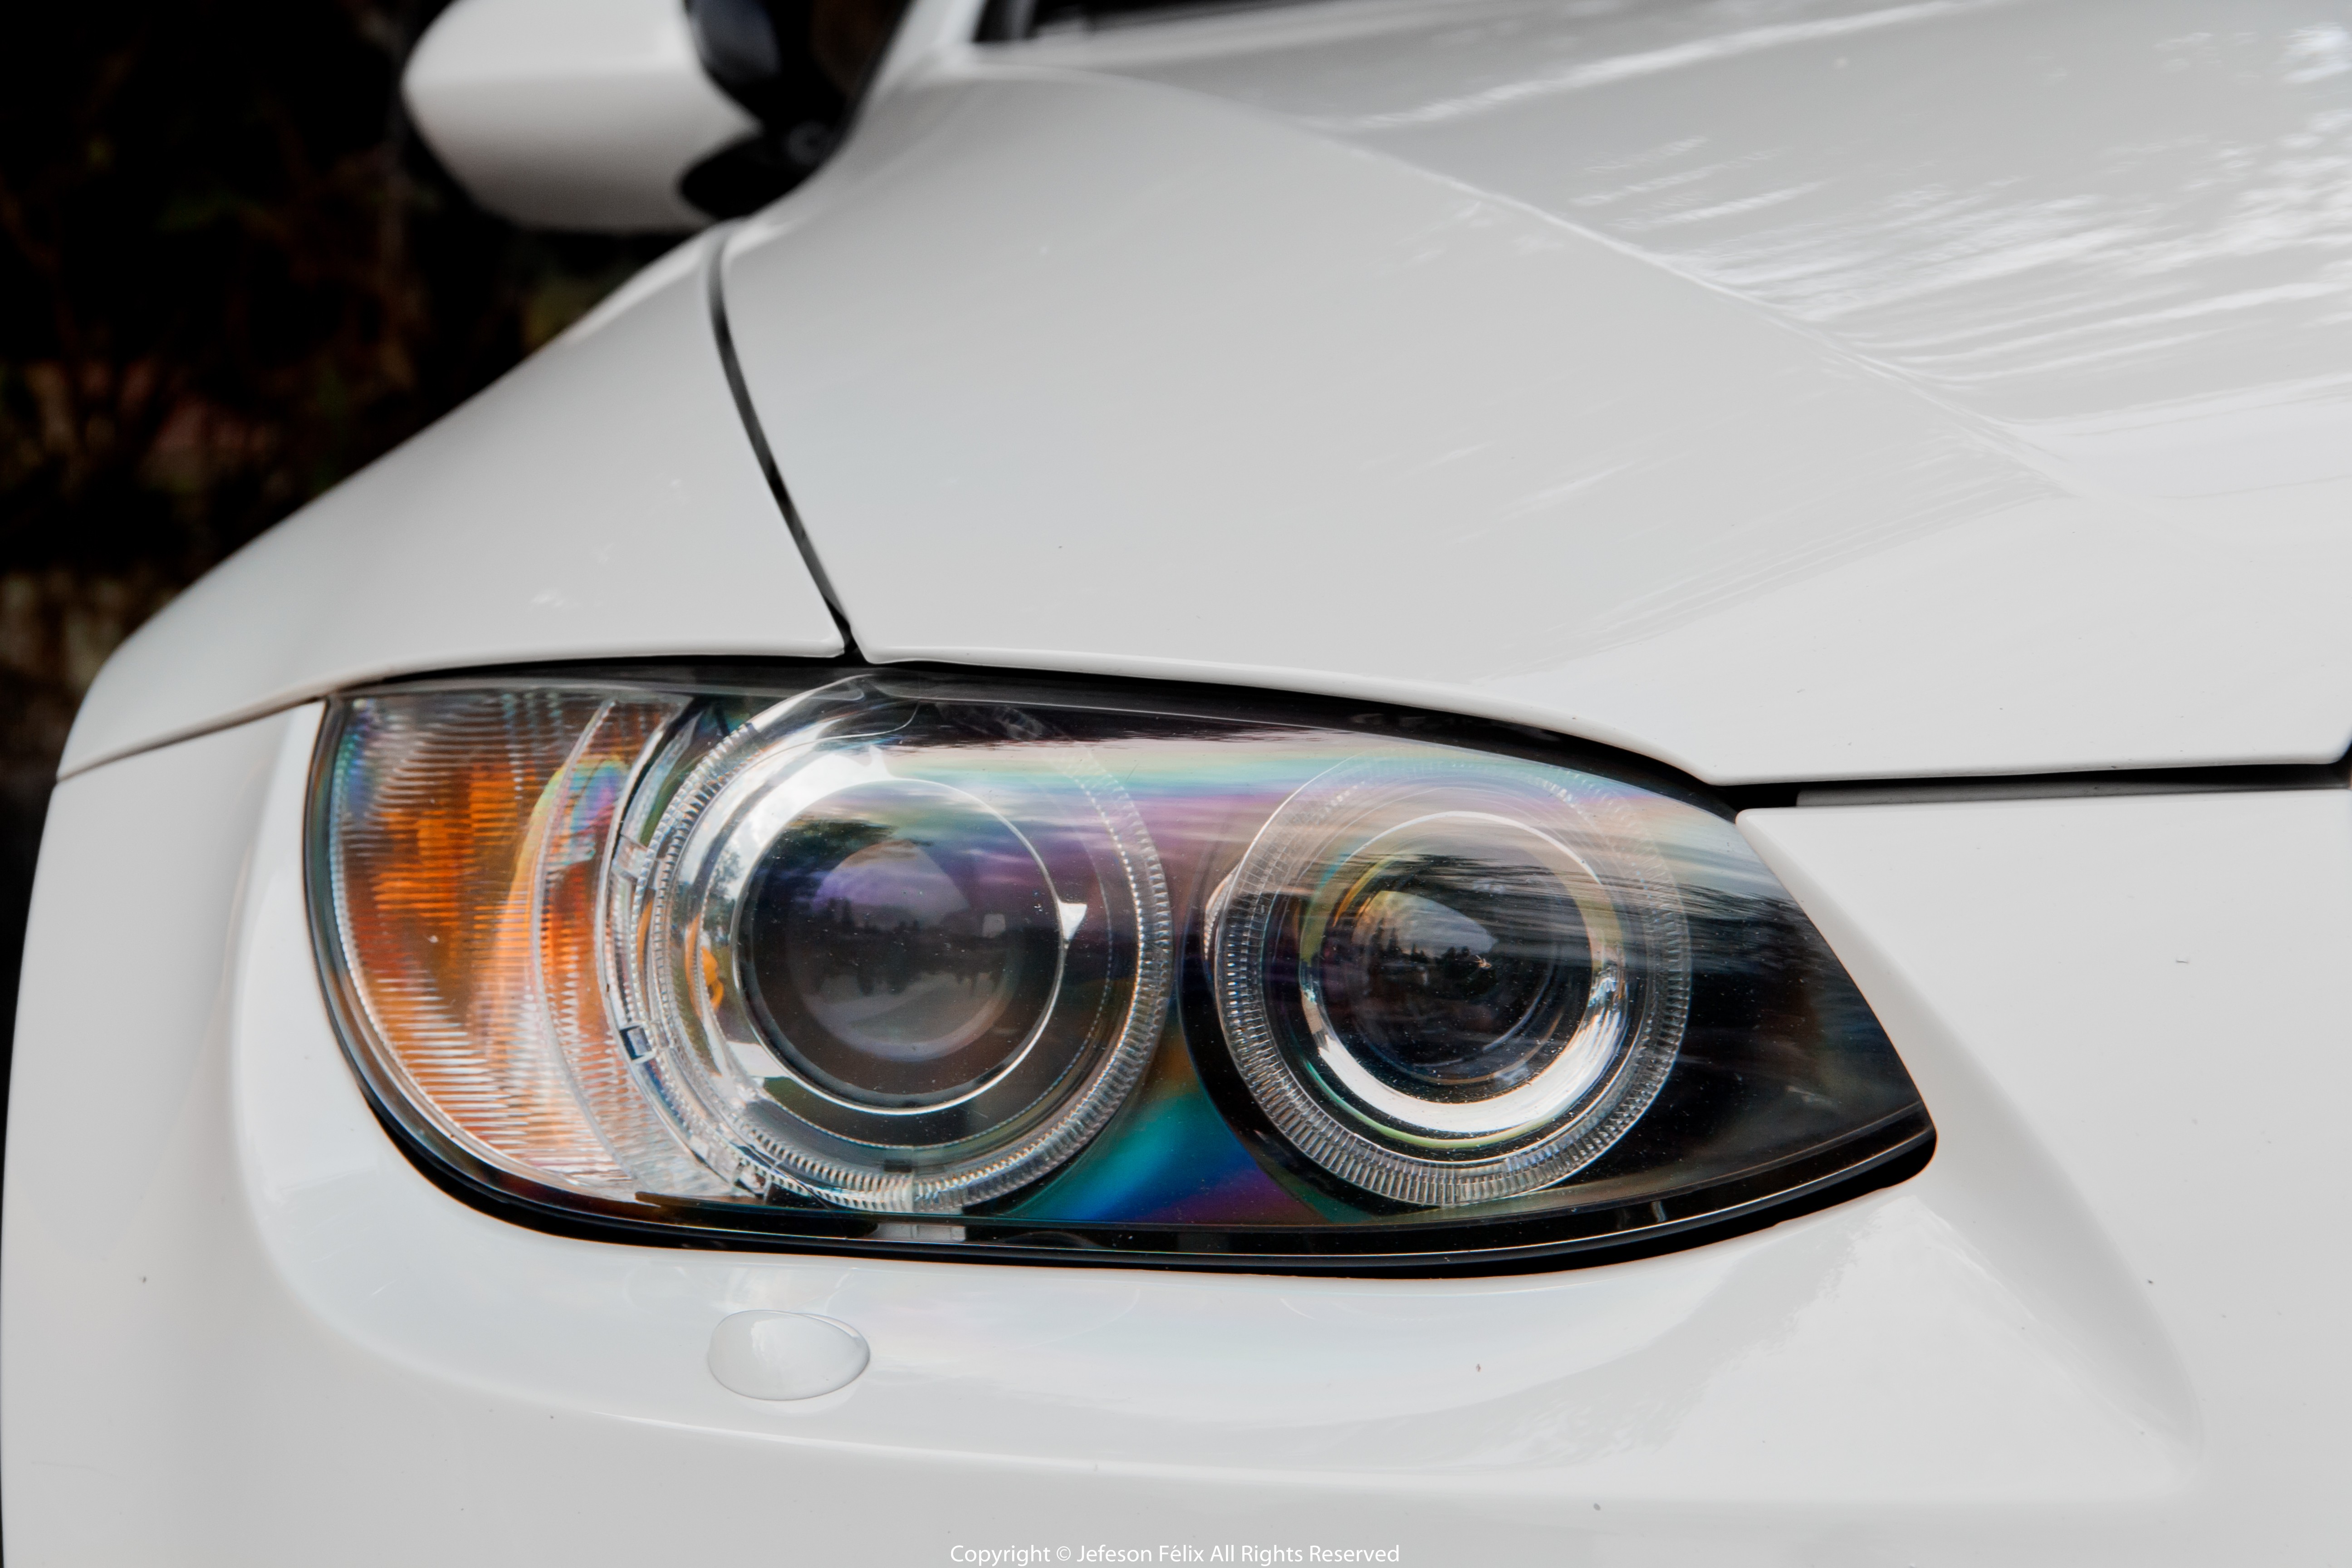 BMW White Cars BMW 3 Series BMW E92 Frontal View Headlights Closeup Car 5184x3456